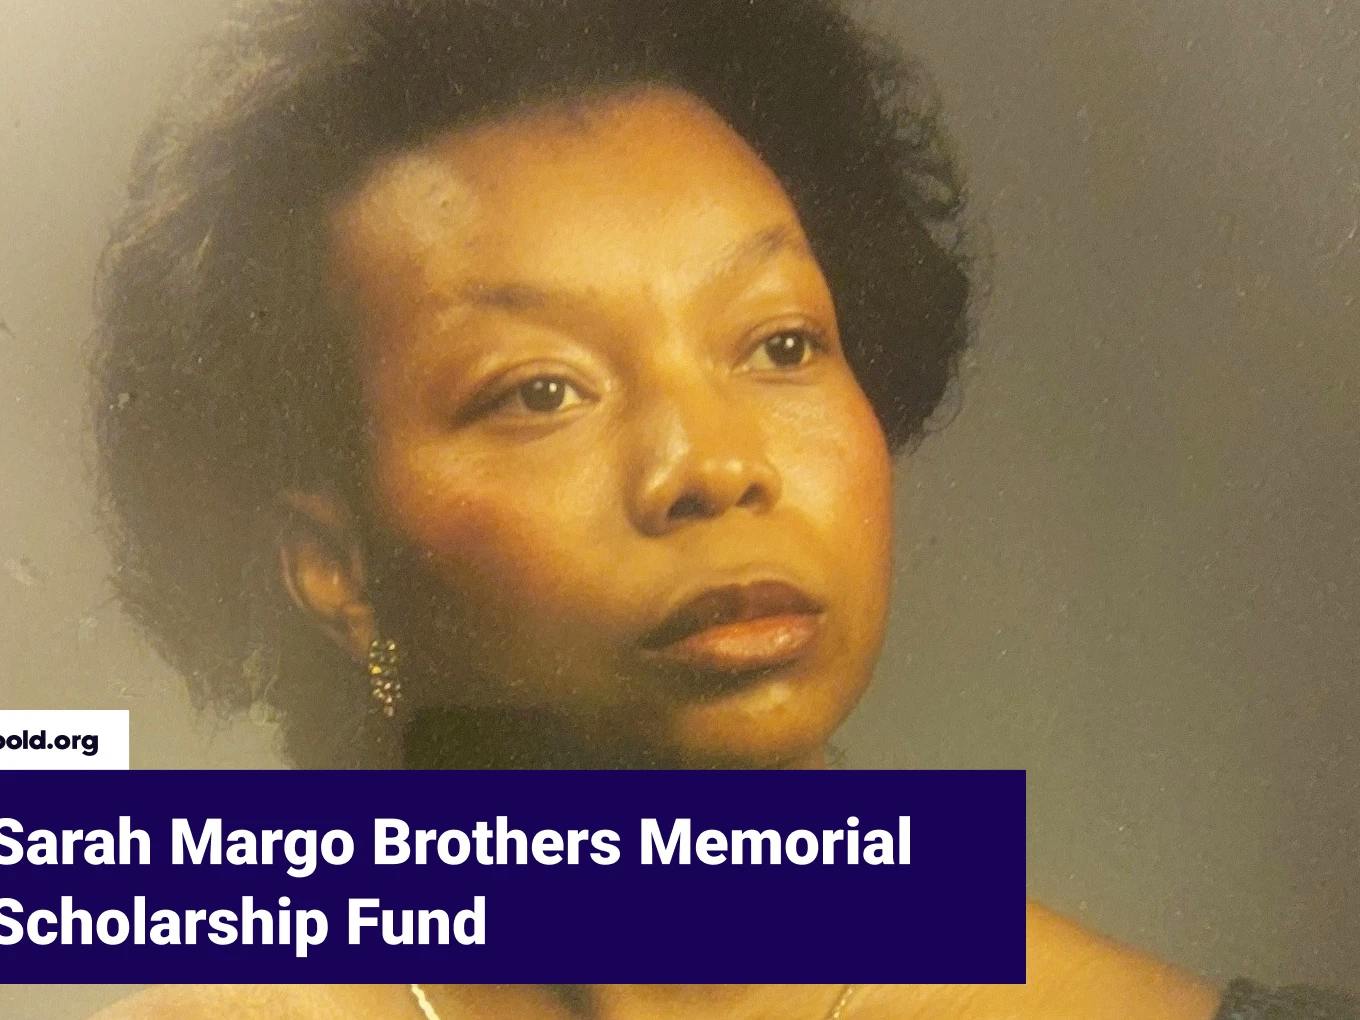 Sarah Margo Brothers Memorial Scholarship Fund